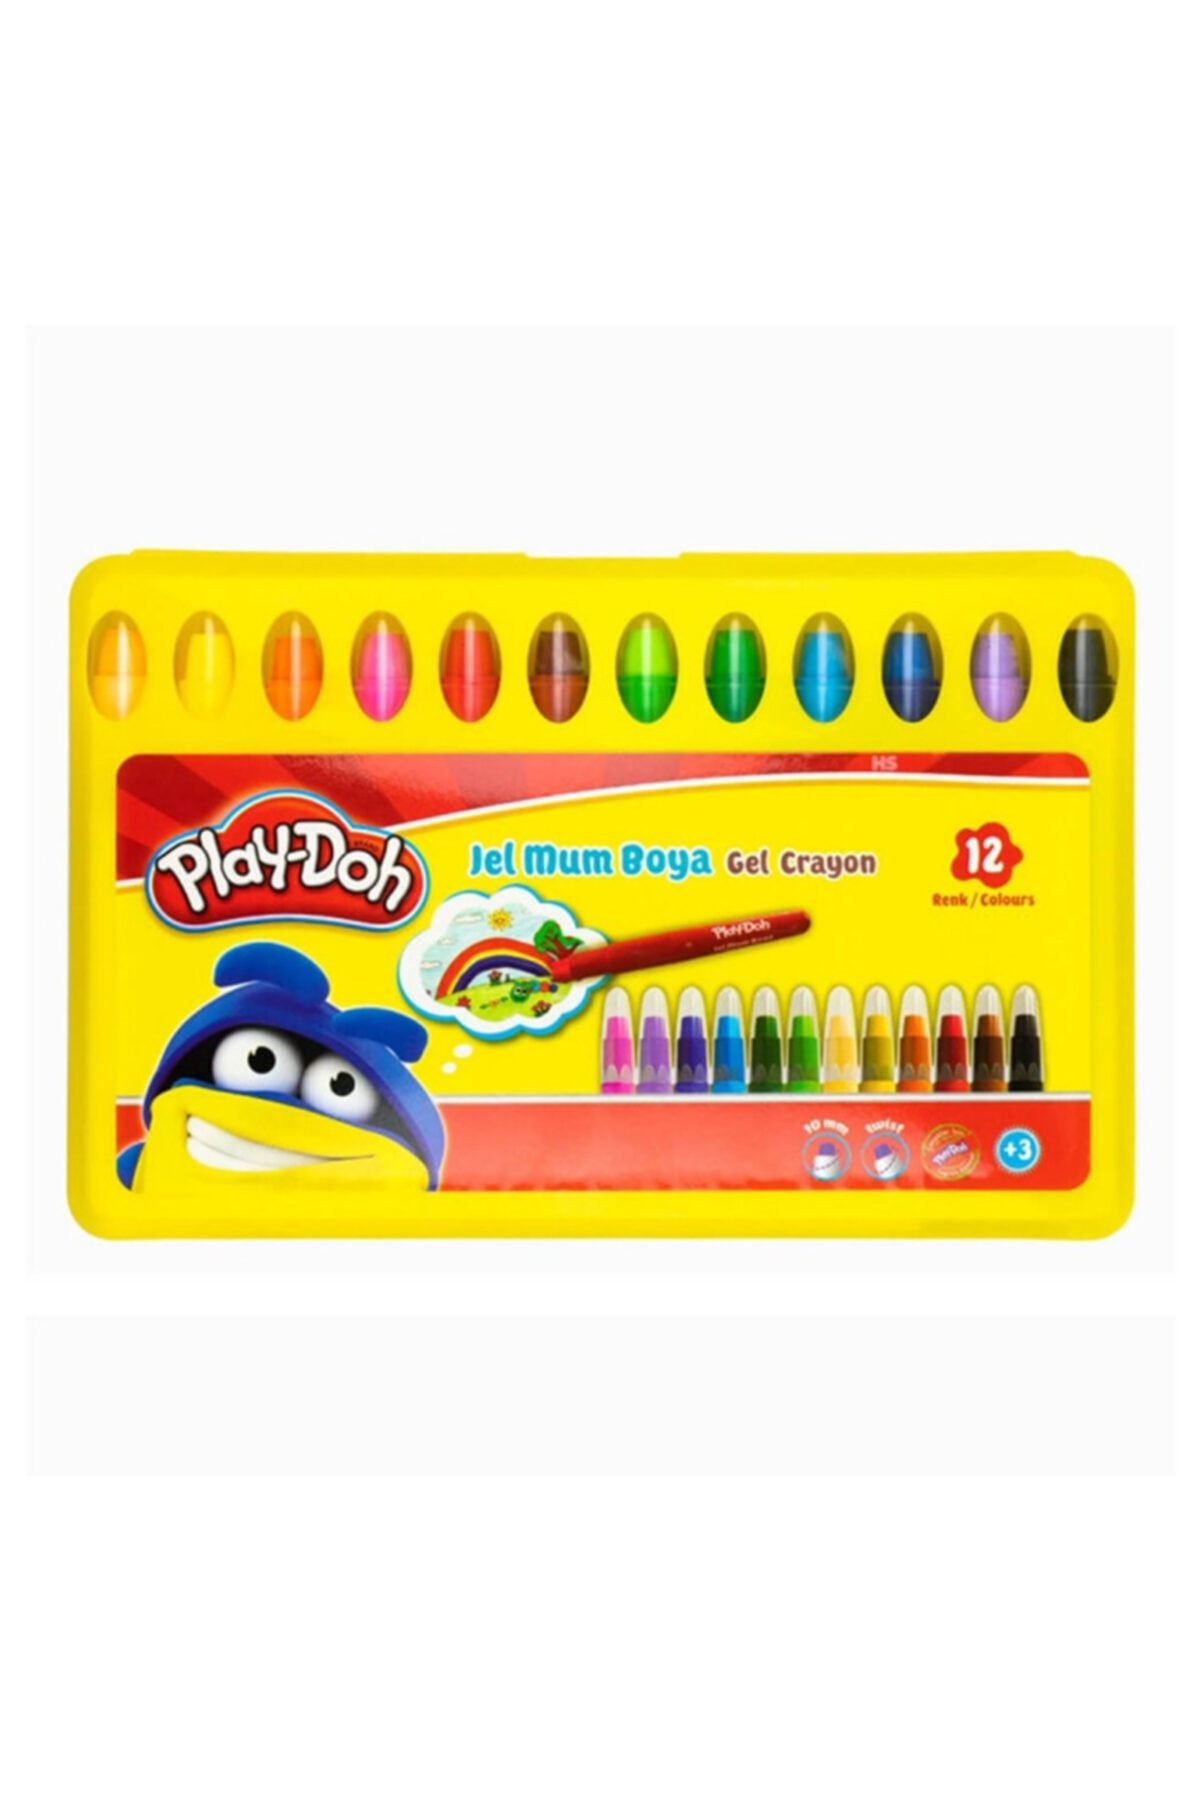 Play Doh Crayon Jel Mum Boya 12 Renk